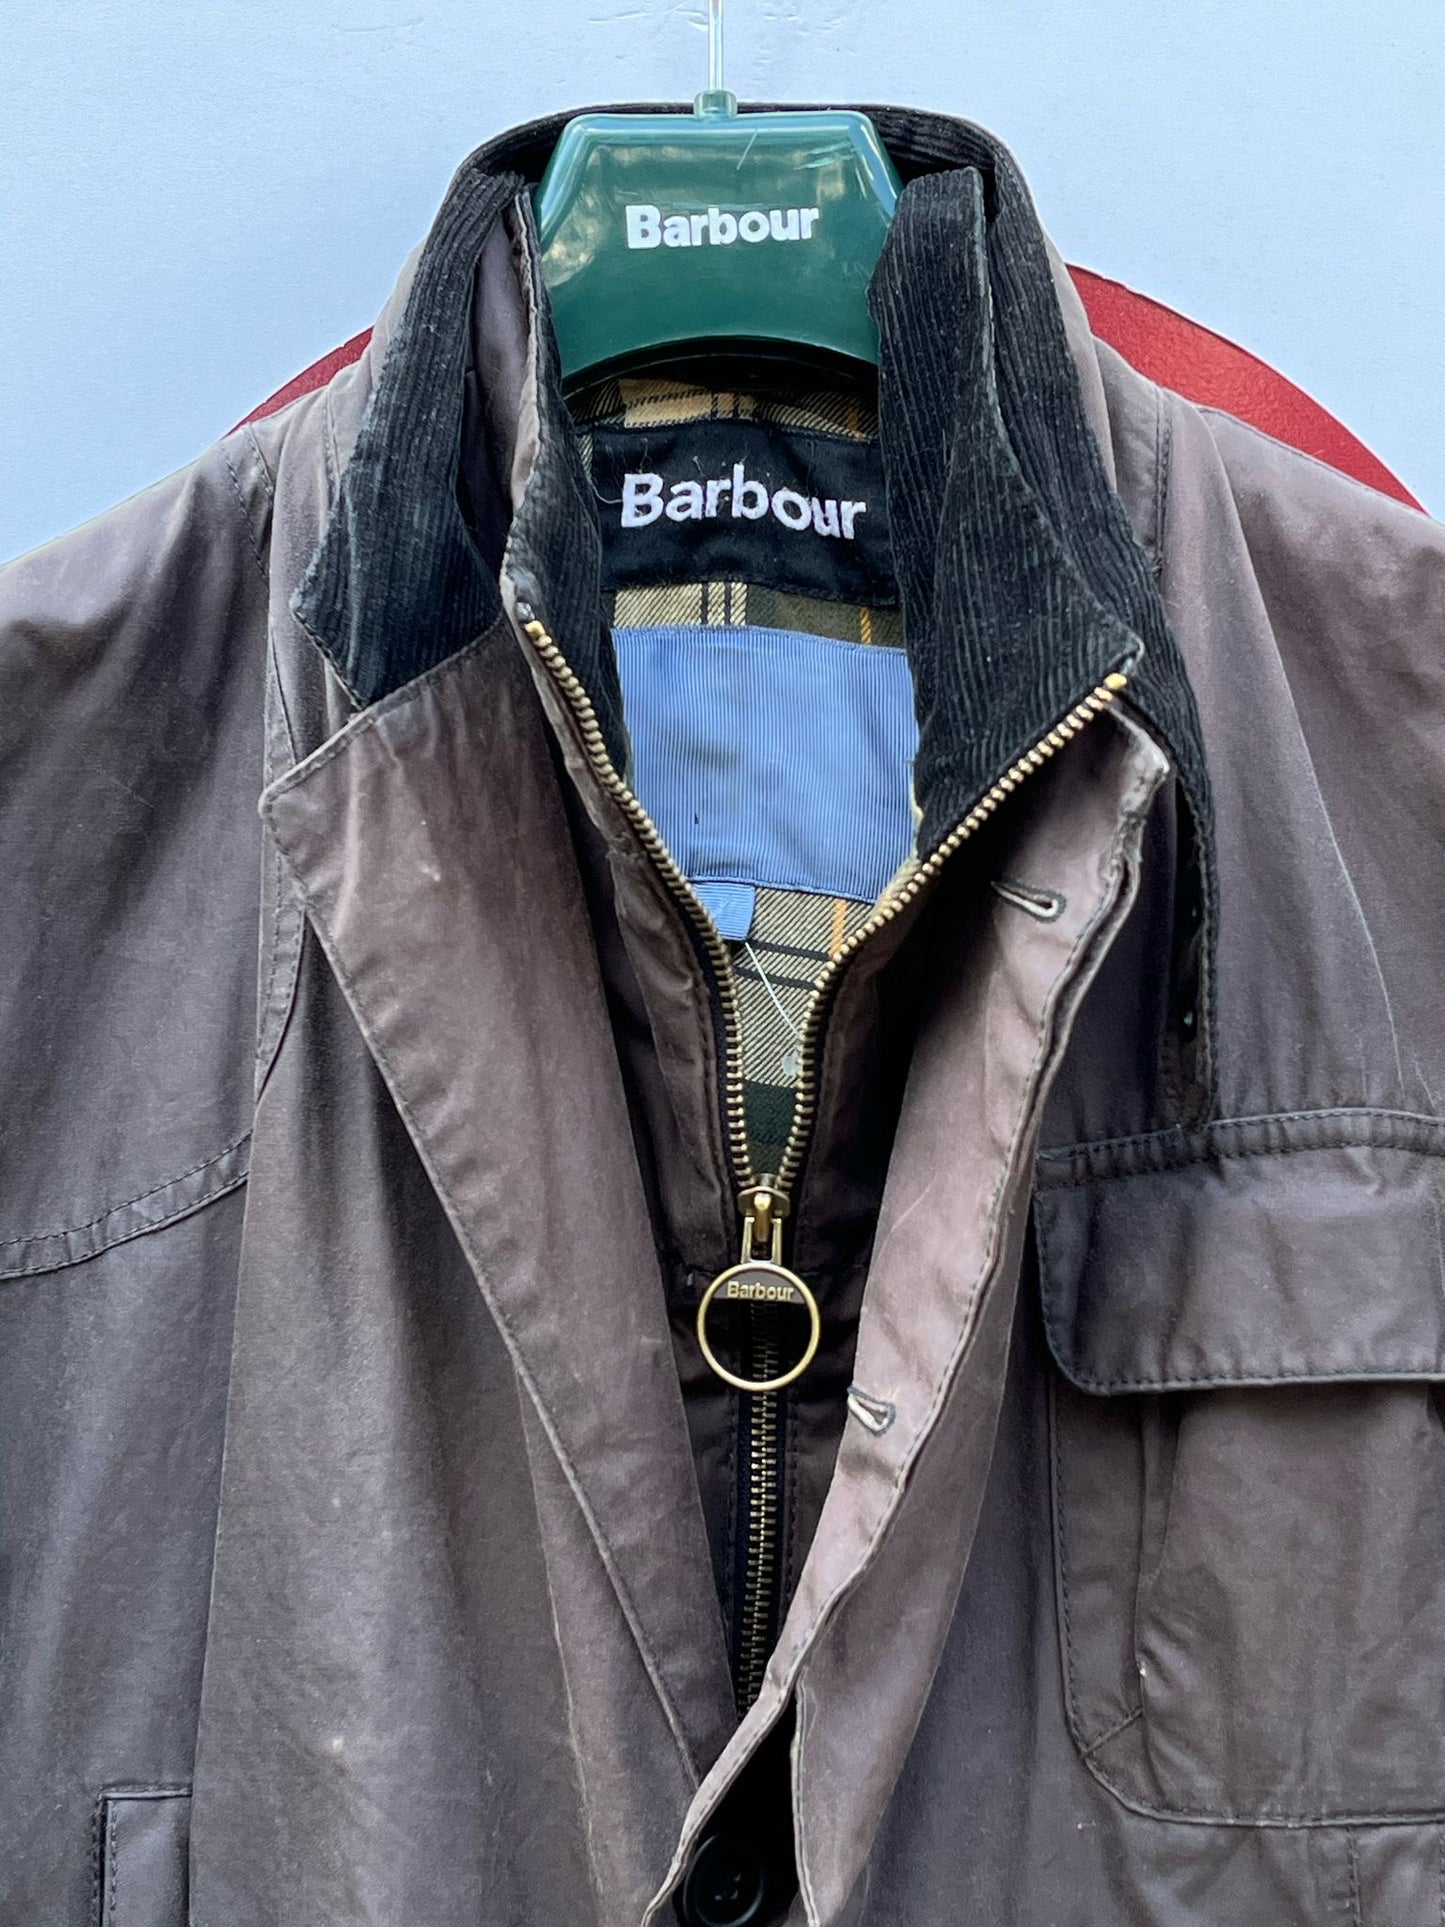 Giacca Barbour grigia cerata Bezique Joe-Casely for John Lewis taglia XL-Man Wax Grey jacket size XL